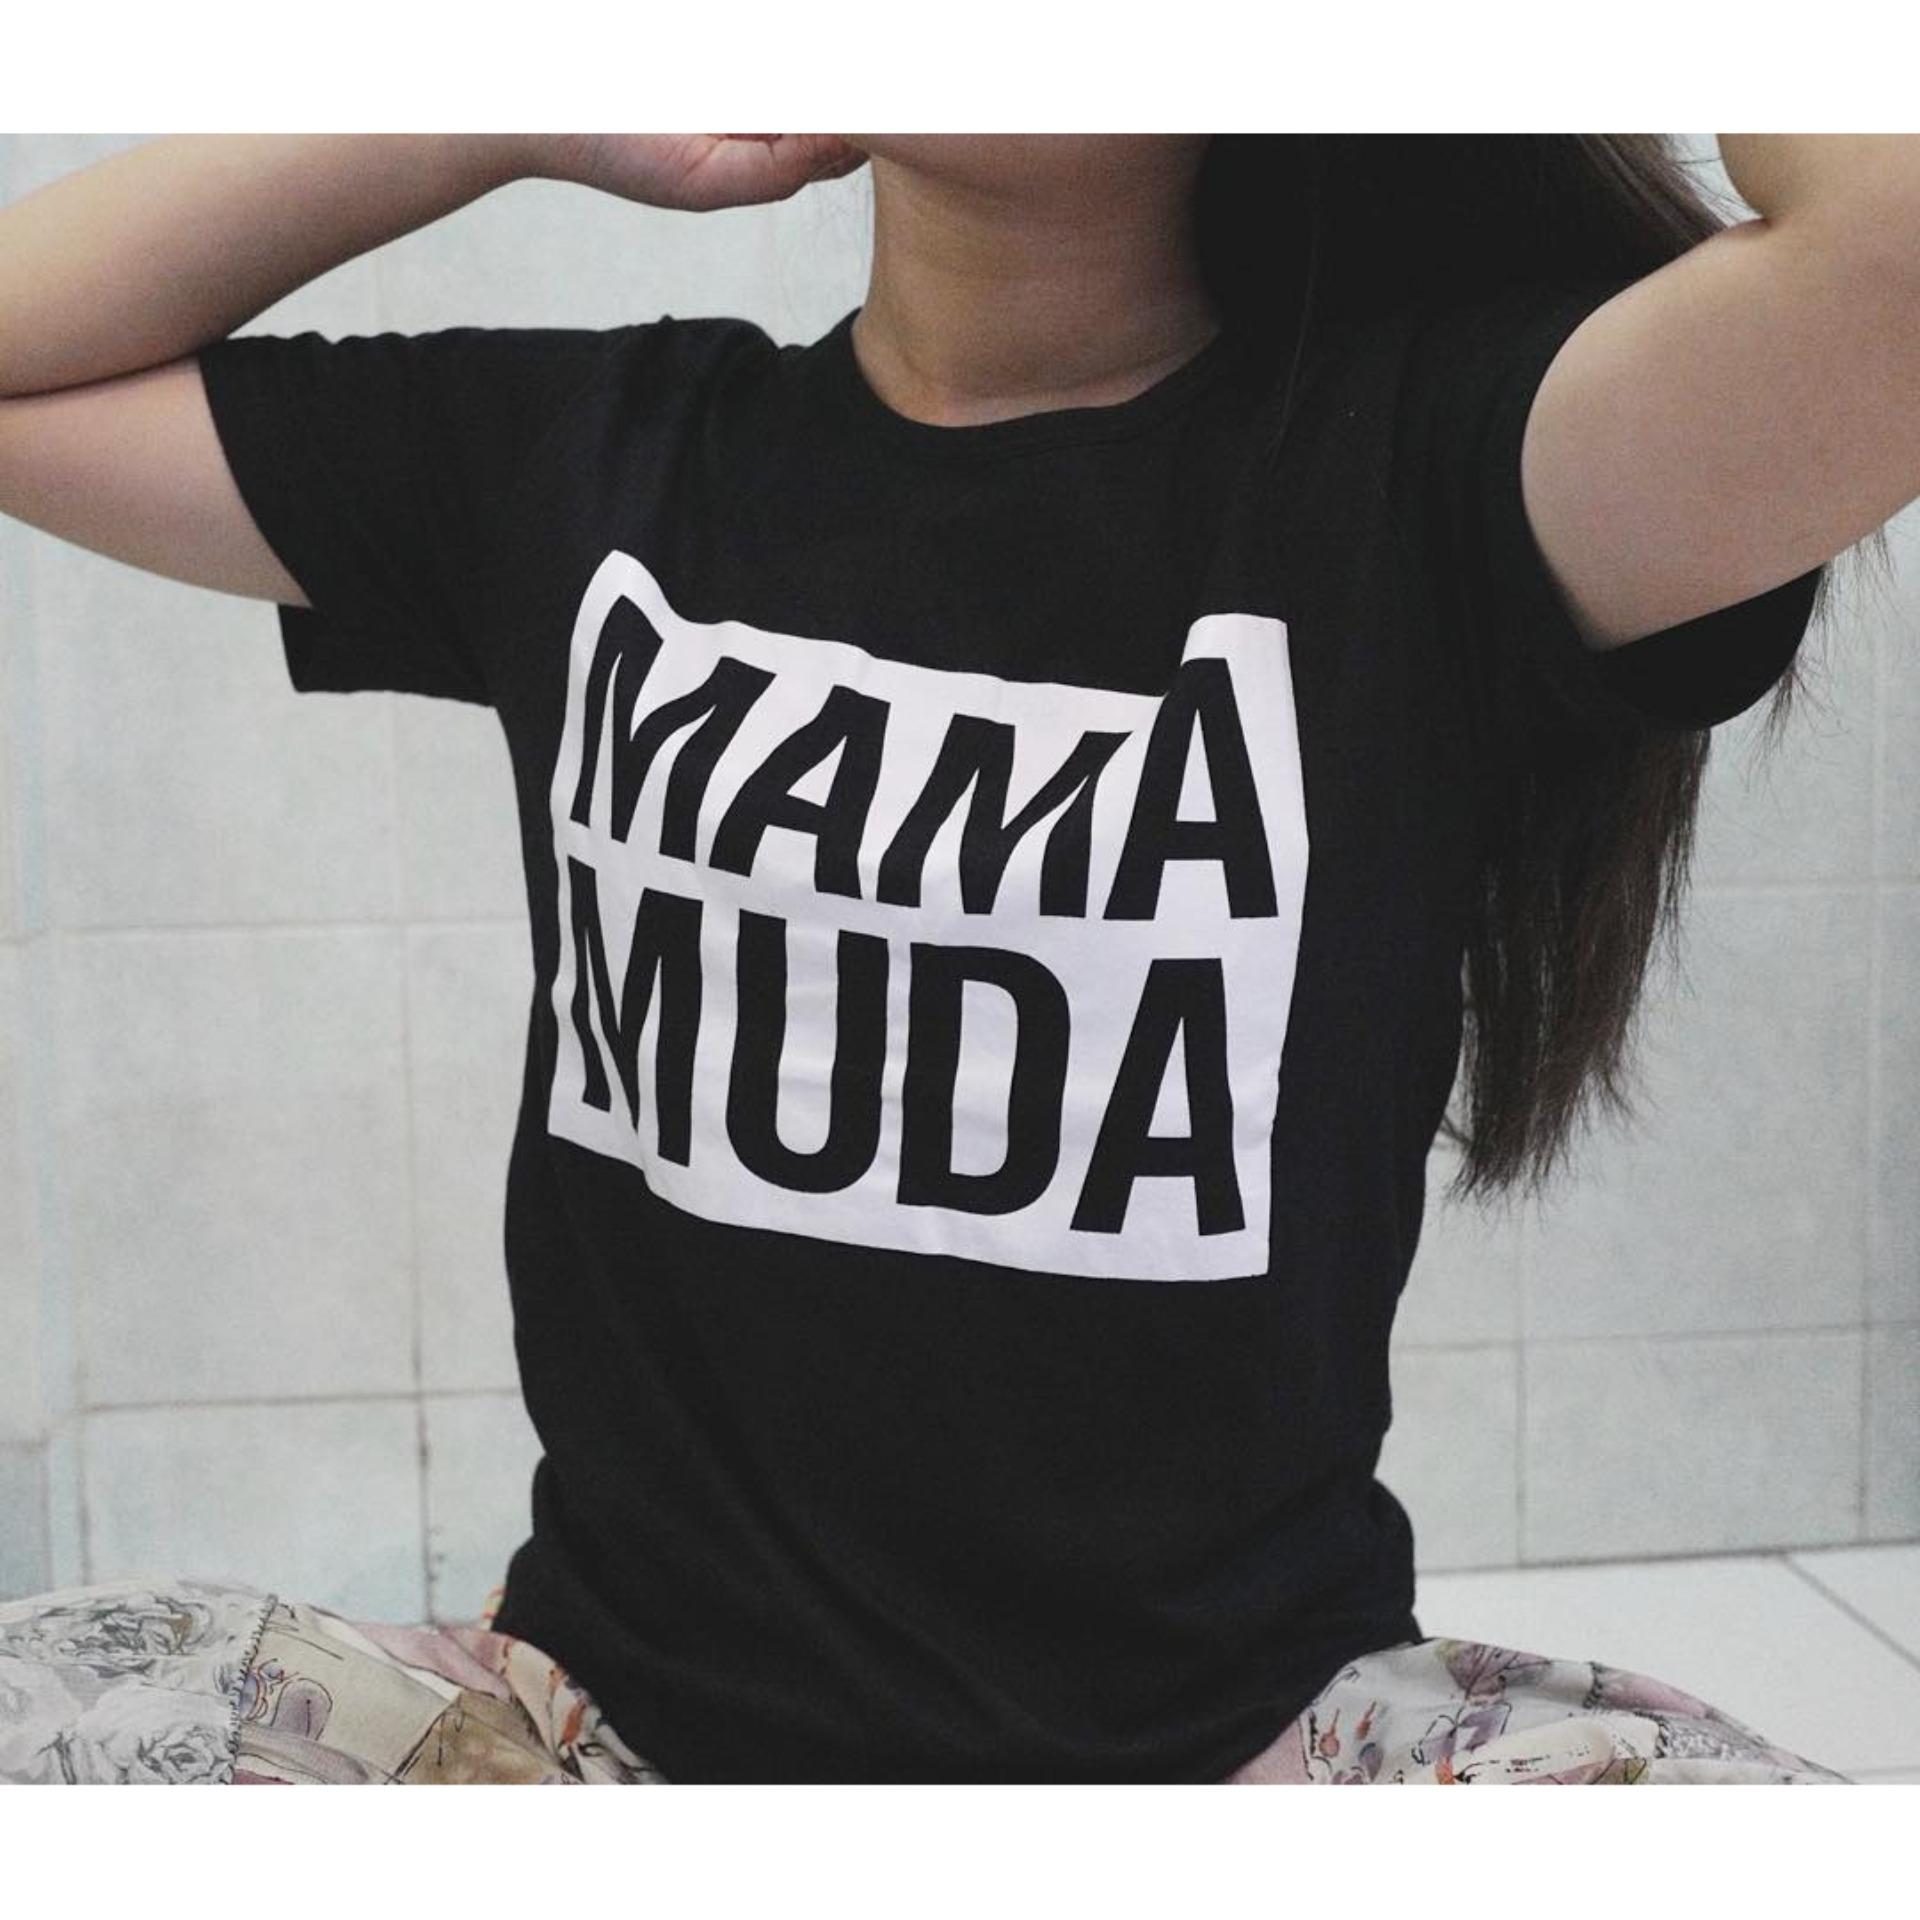 YGTSHIRT - T-shirt MAMA MUDA Tumblr Tee Cewek / Kaos Wanita / Tshirt Cewe Cotton Combad / Kaos Oblong / Trending Shirt  